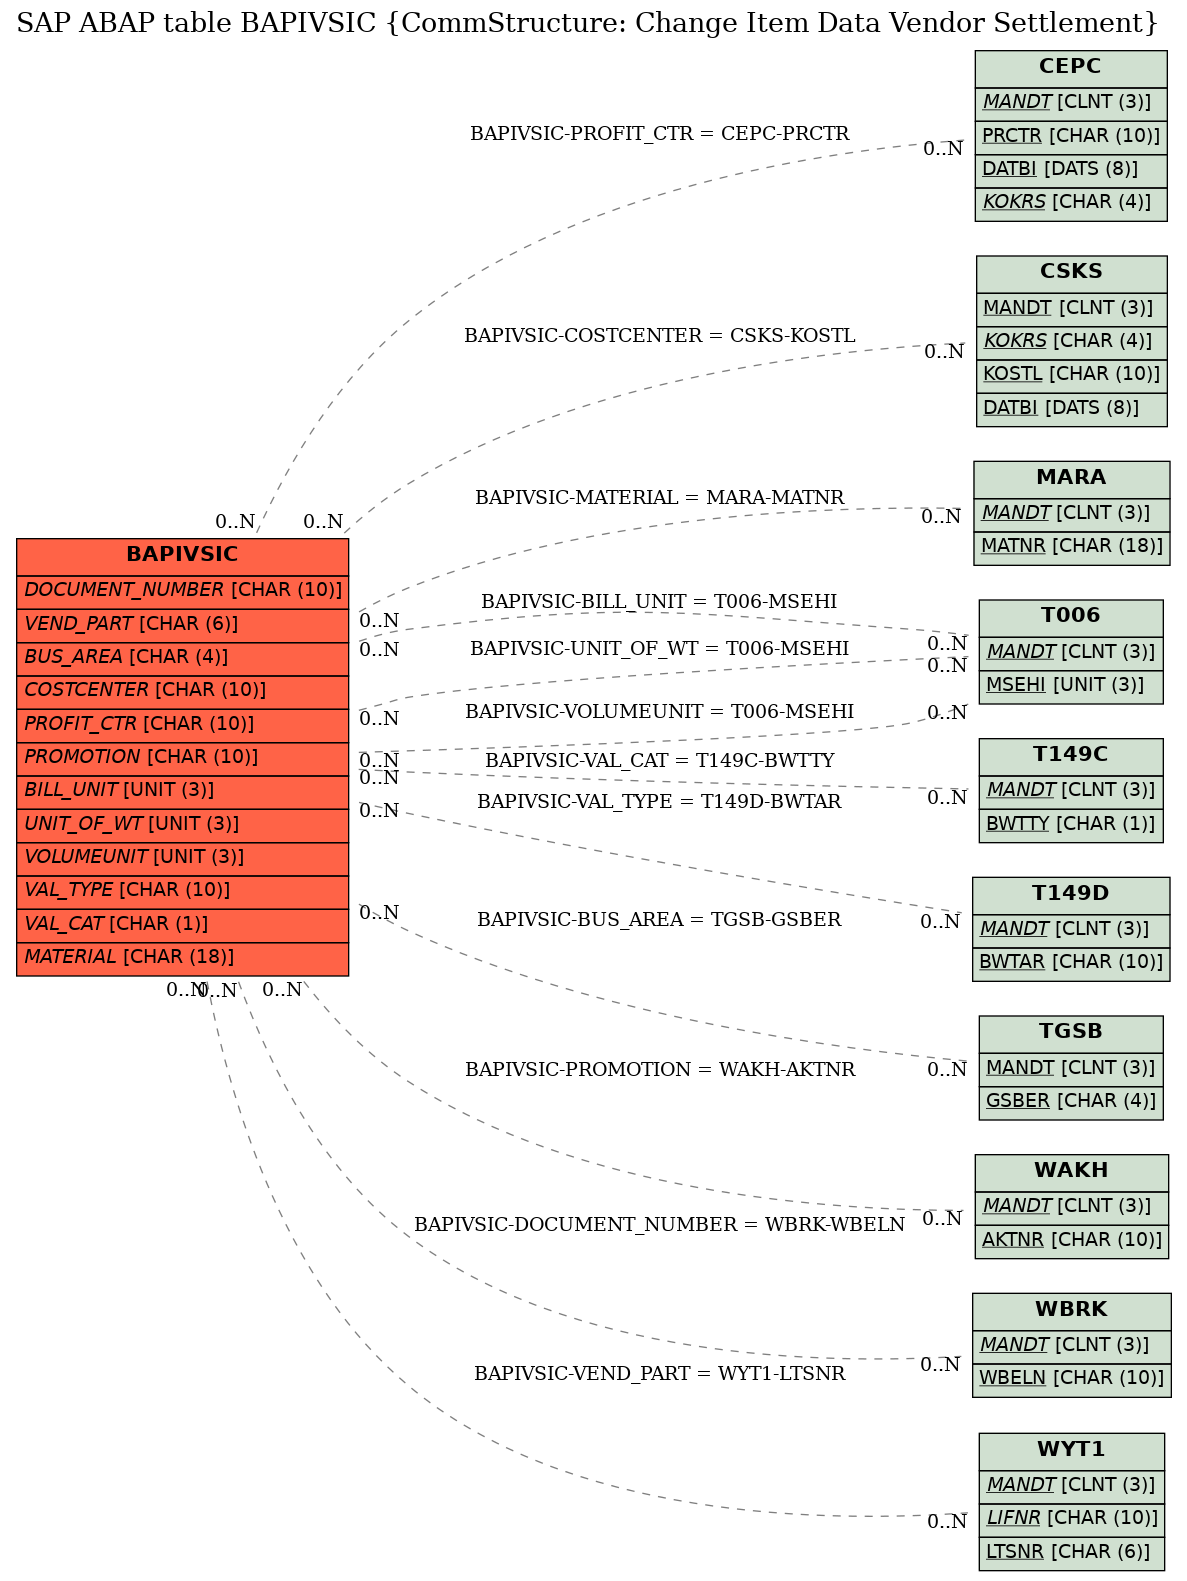 E-R Diagram for table BAPIVSIC (CommStructure: Change Item Data Vendor Settlement)